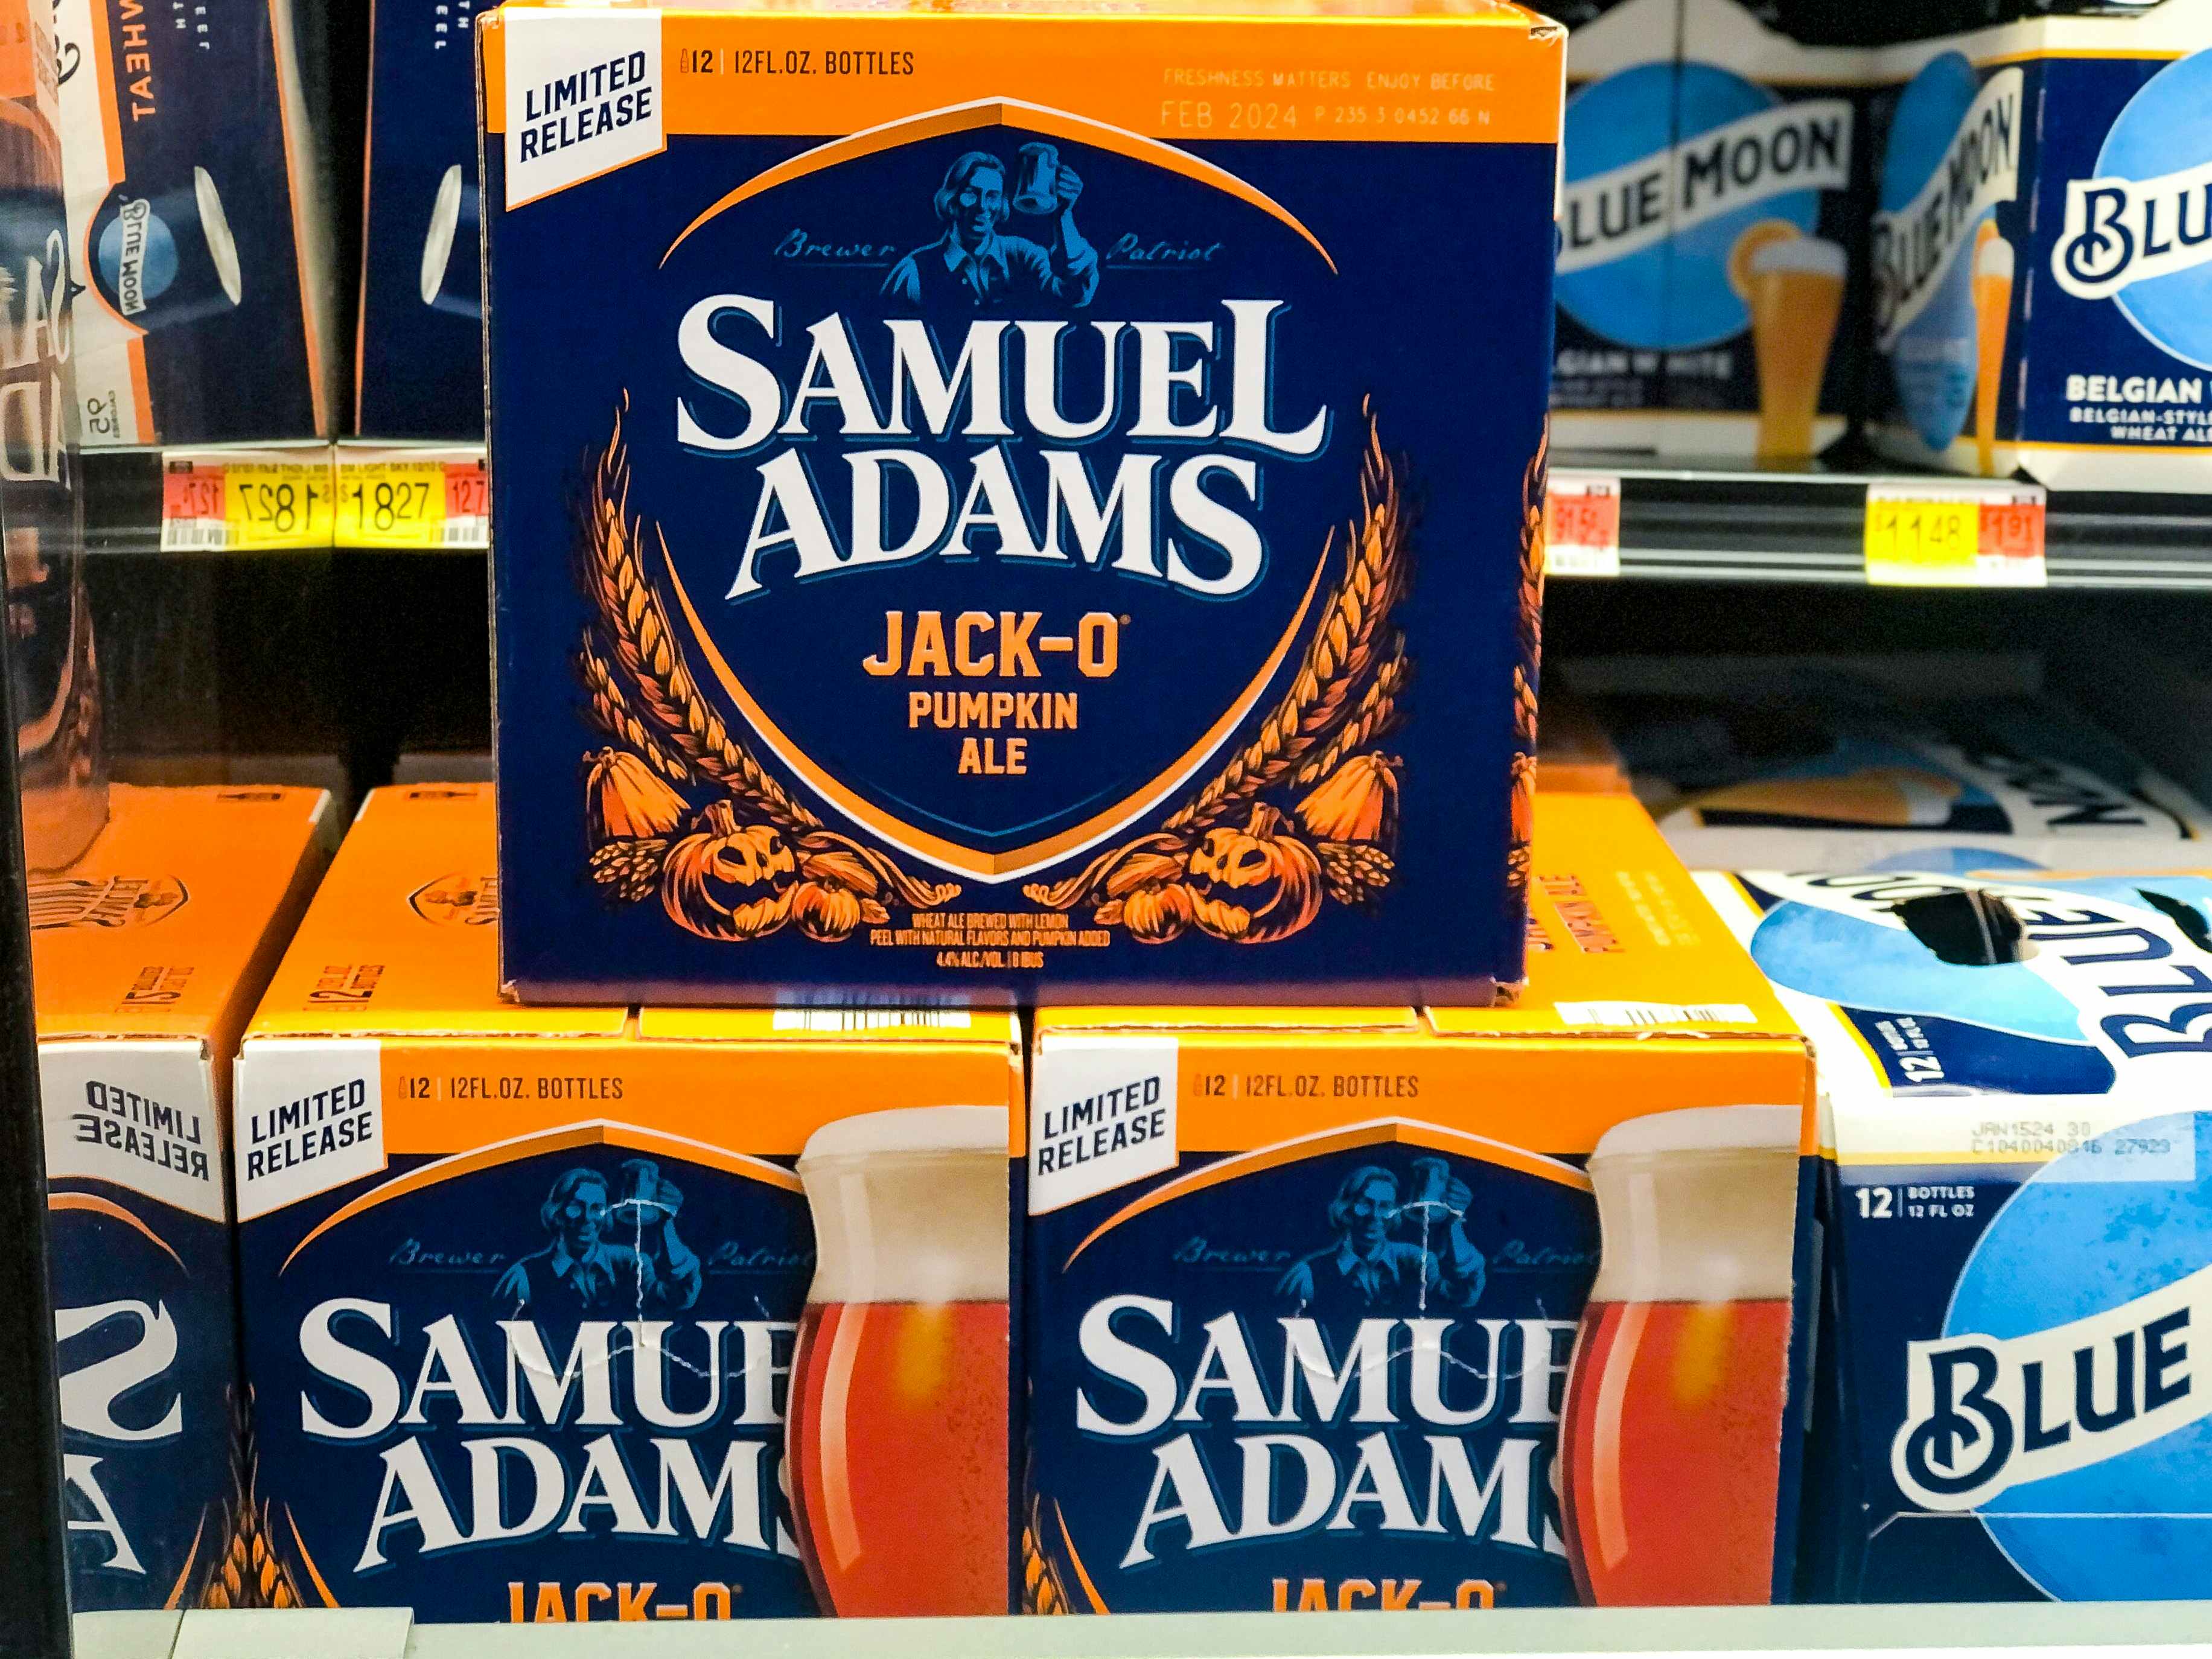 Samuel adams pumpkin ale on shelf